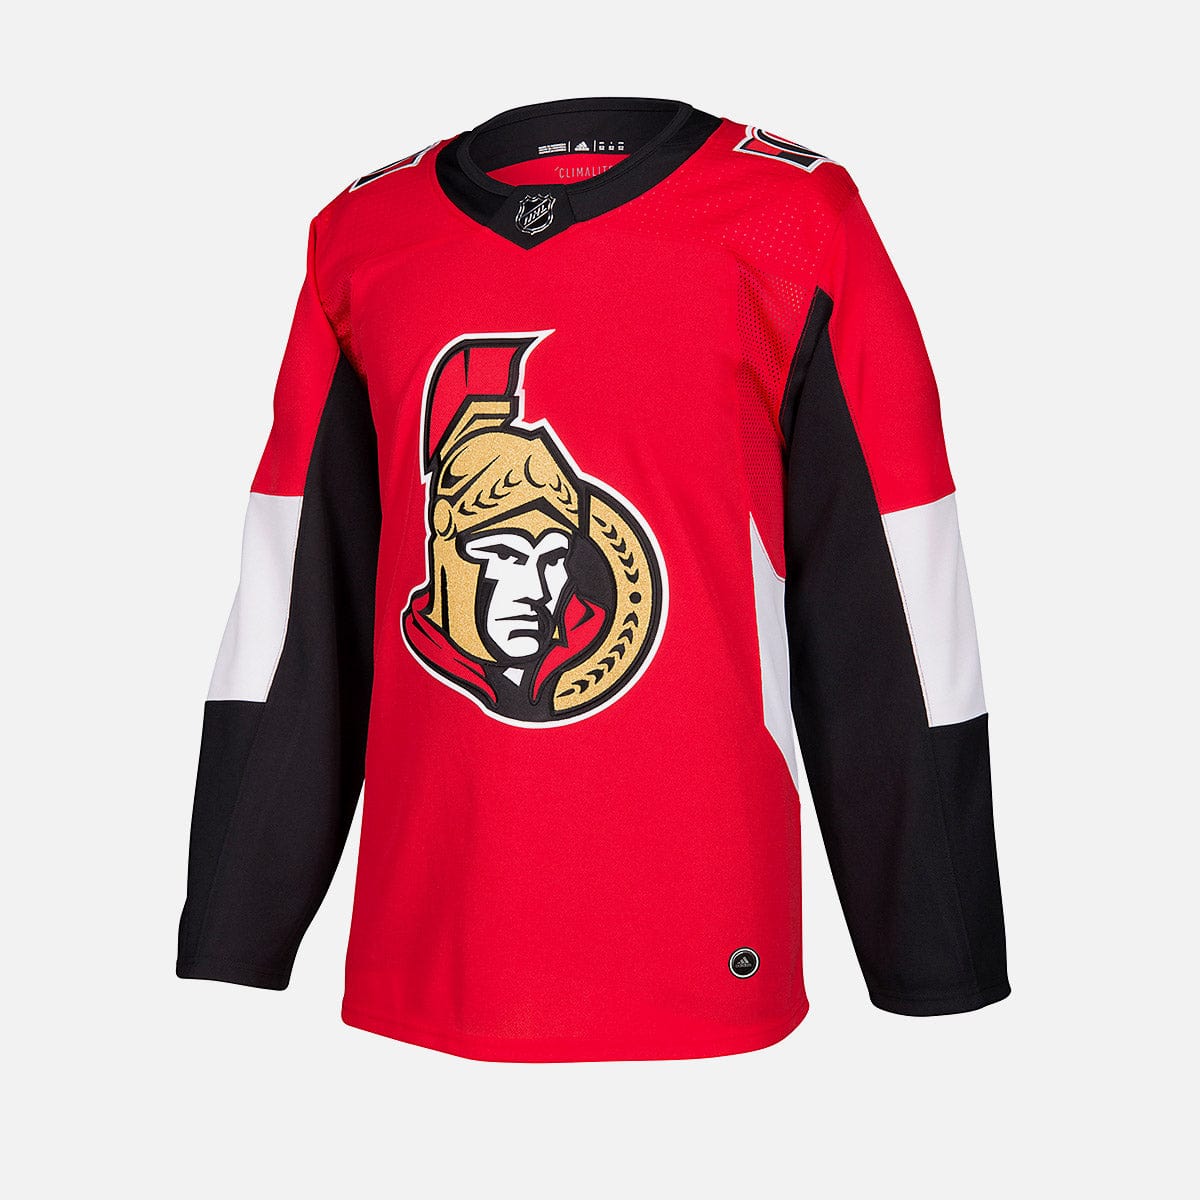 Ottawa Senators Home Adidas Authentic Senior Jersey (2019)